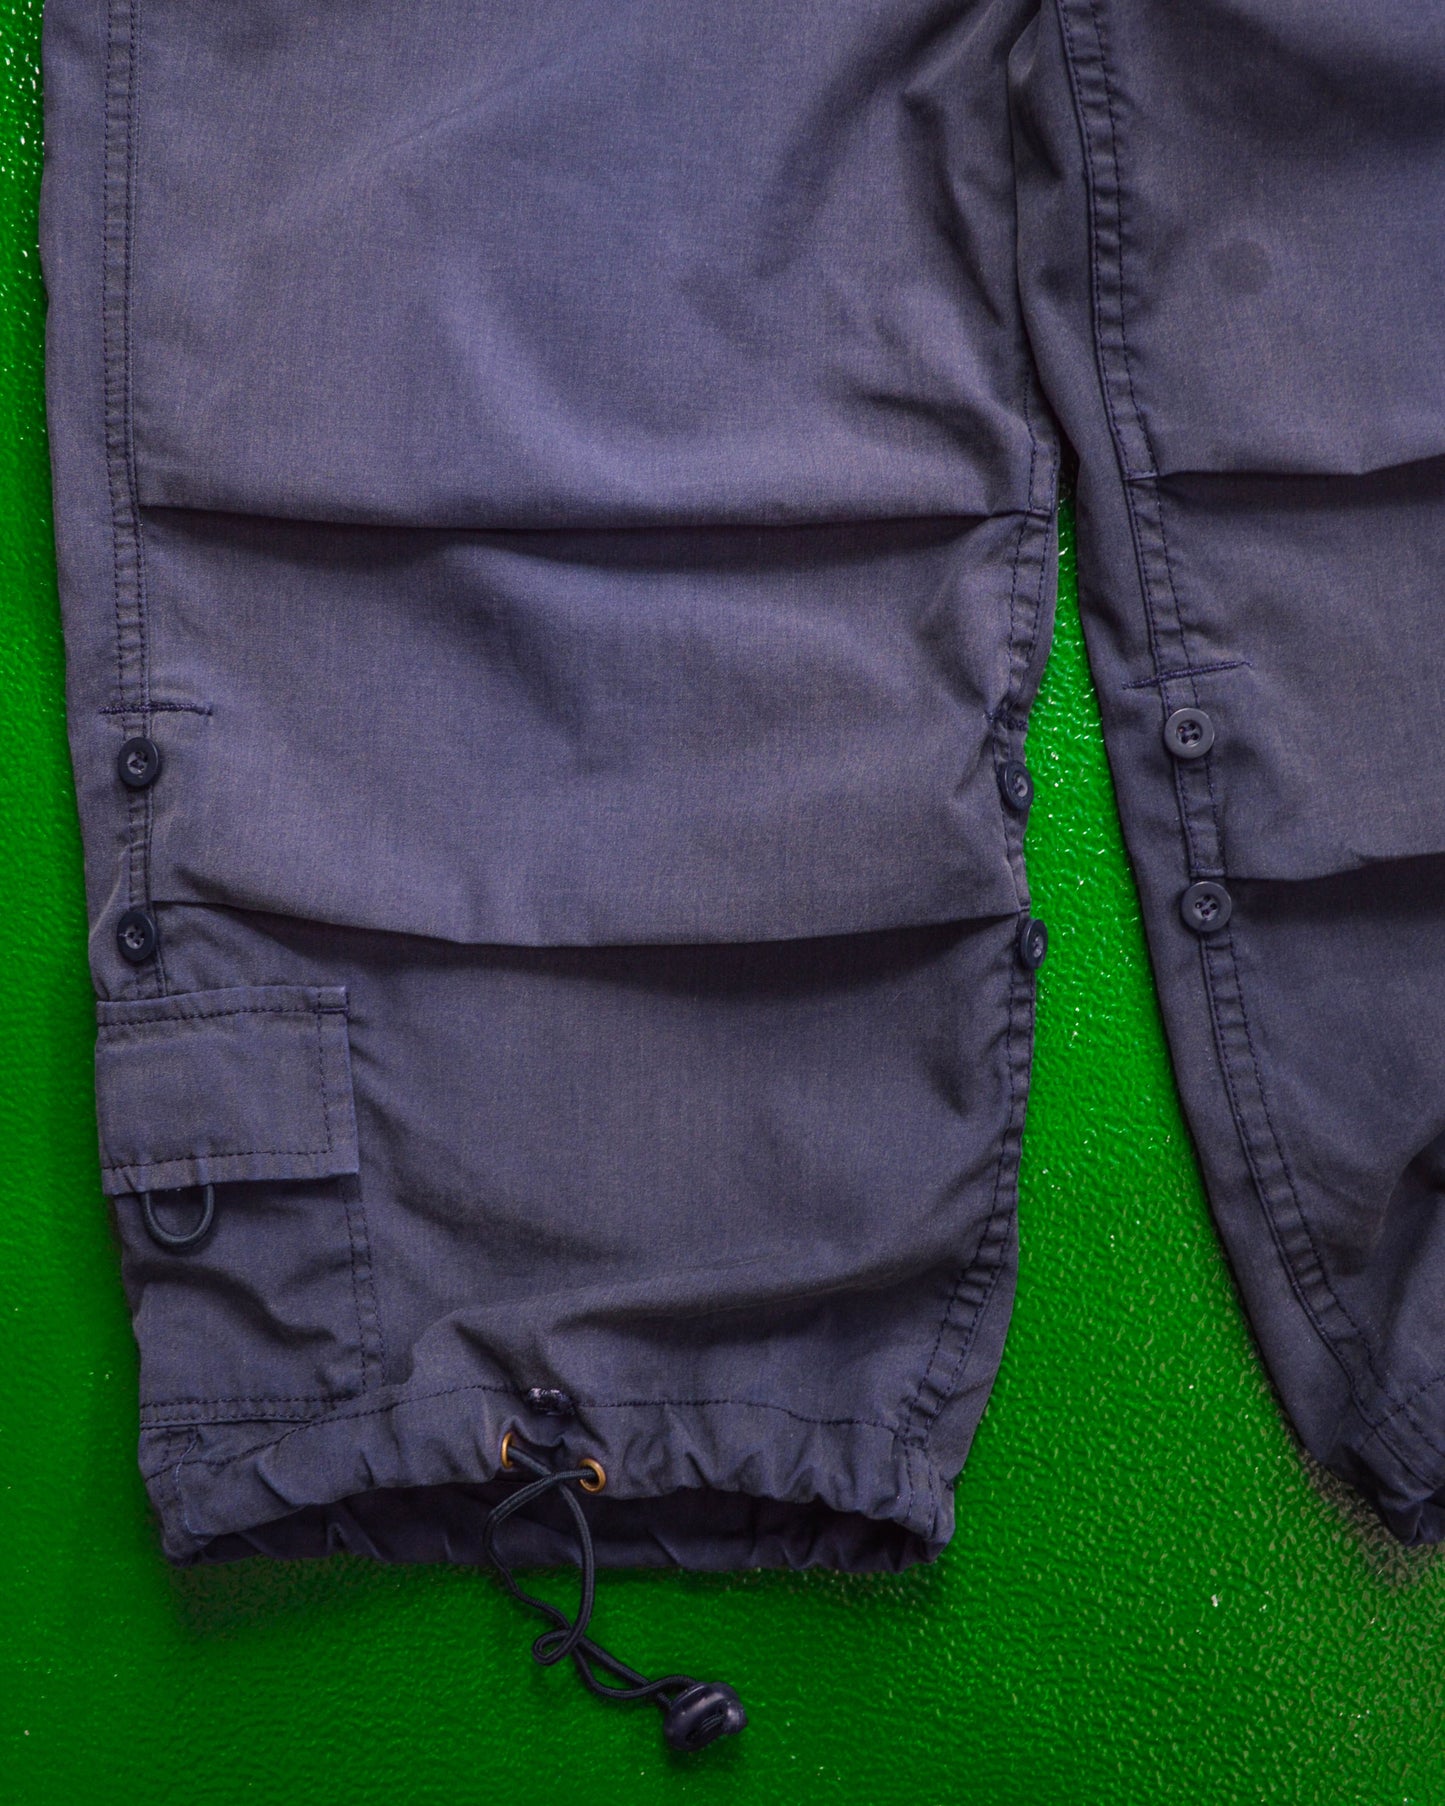 Schott Navy Knee Dart Sno-Pant Style 3/4 Length Shorts / Pants (32)